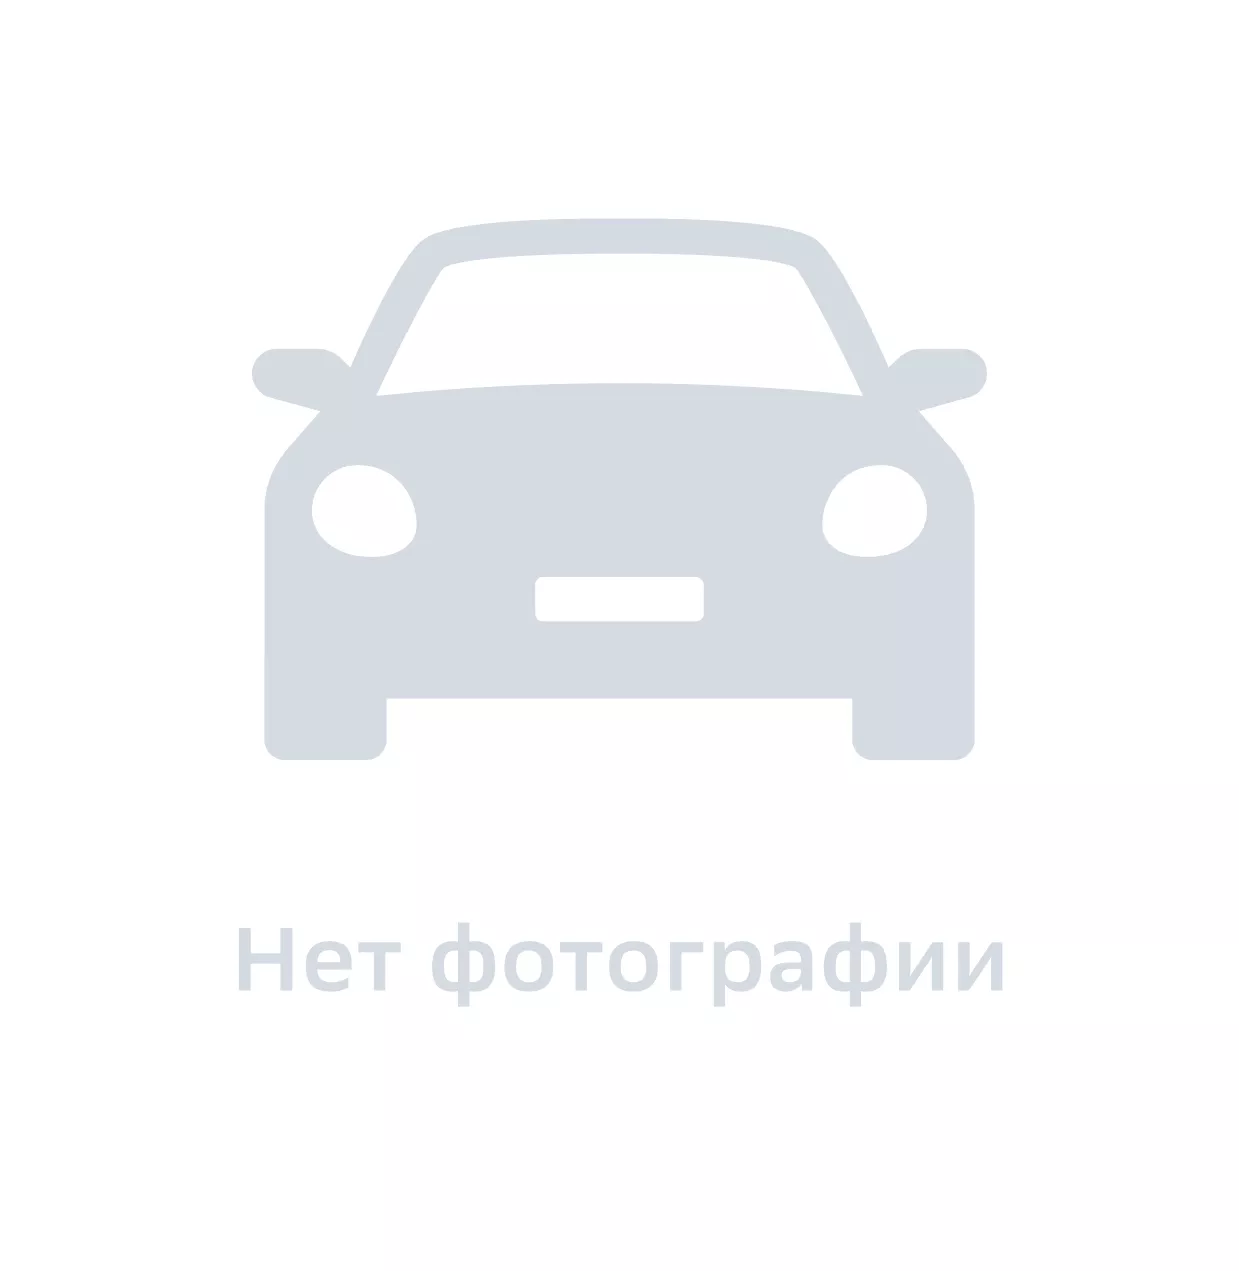 Хомут автомобильный, Hyundai-KIA, арт. K992831900, цена за 1 шт.